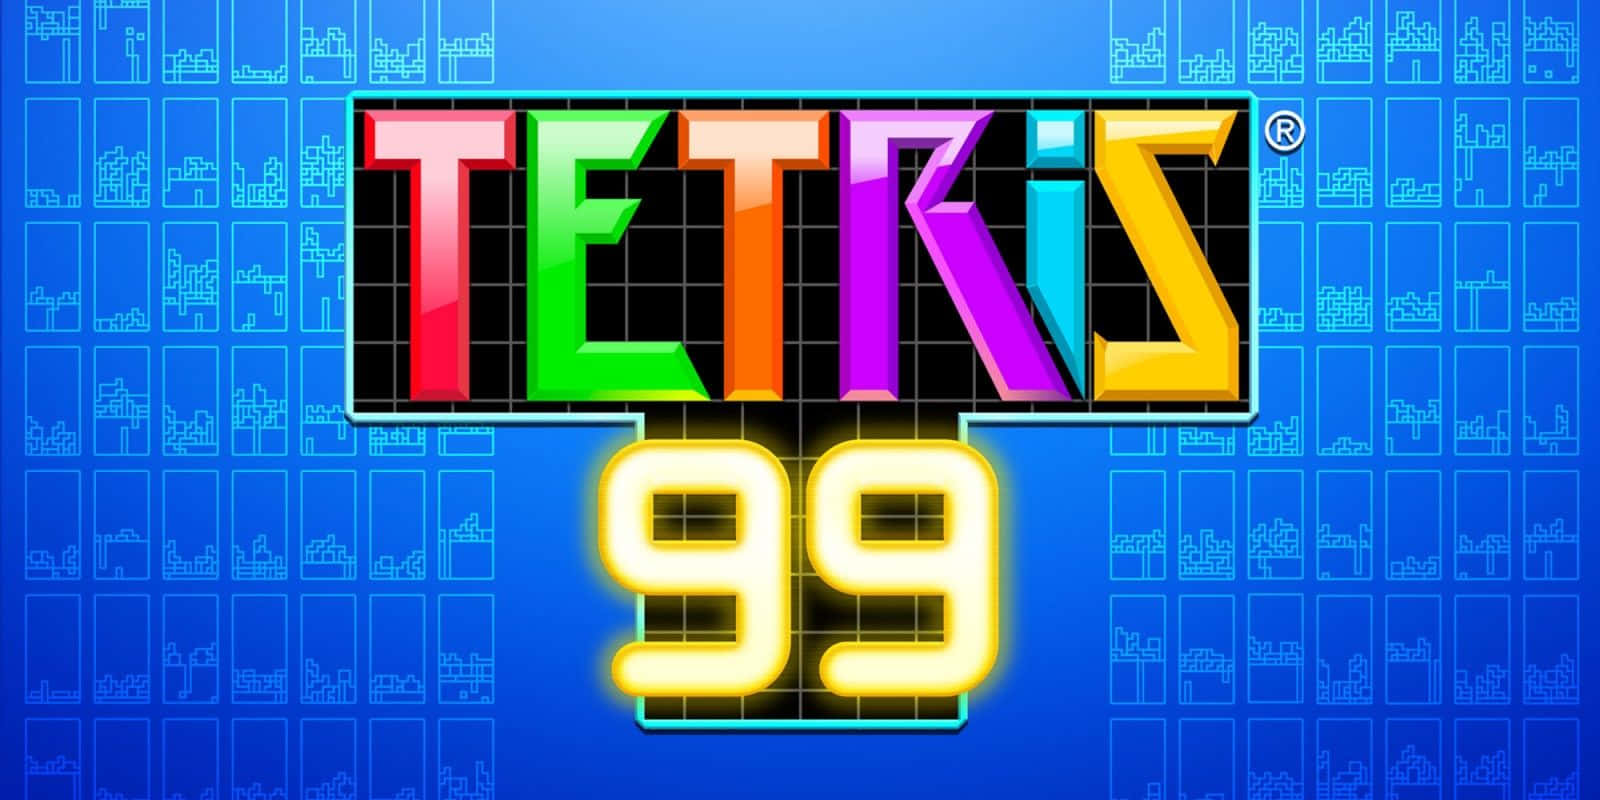 Classic Tetris Game in Action